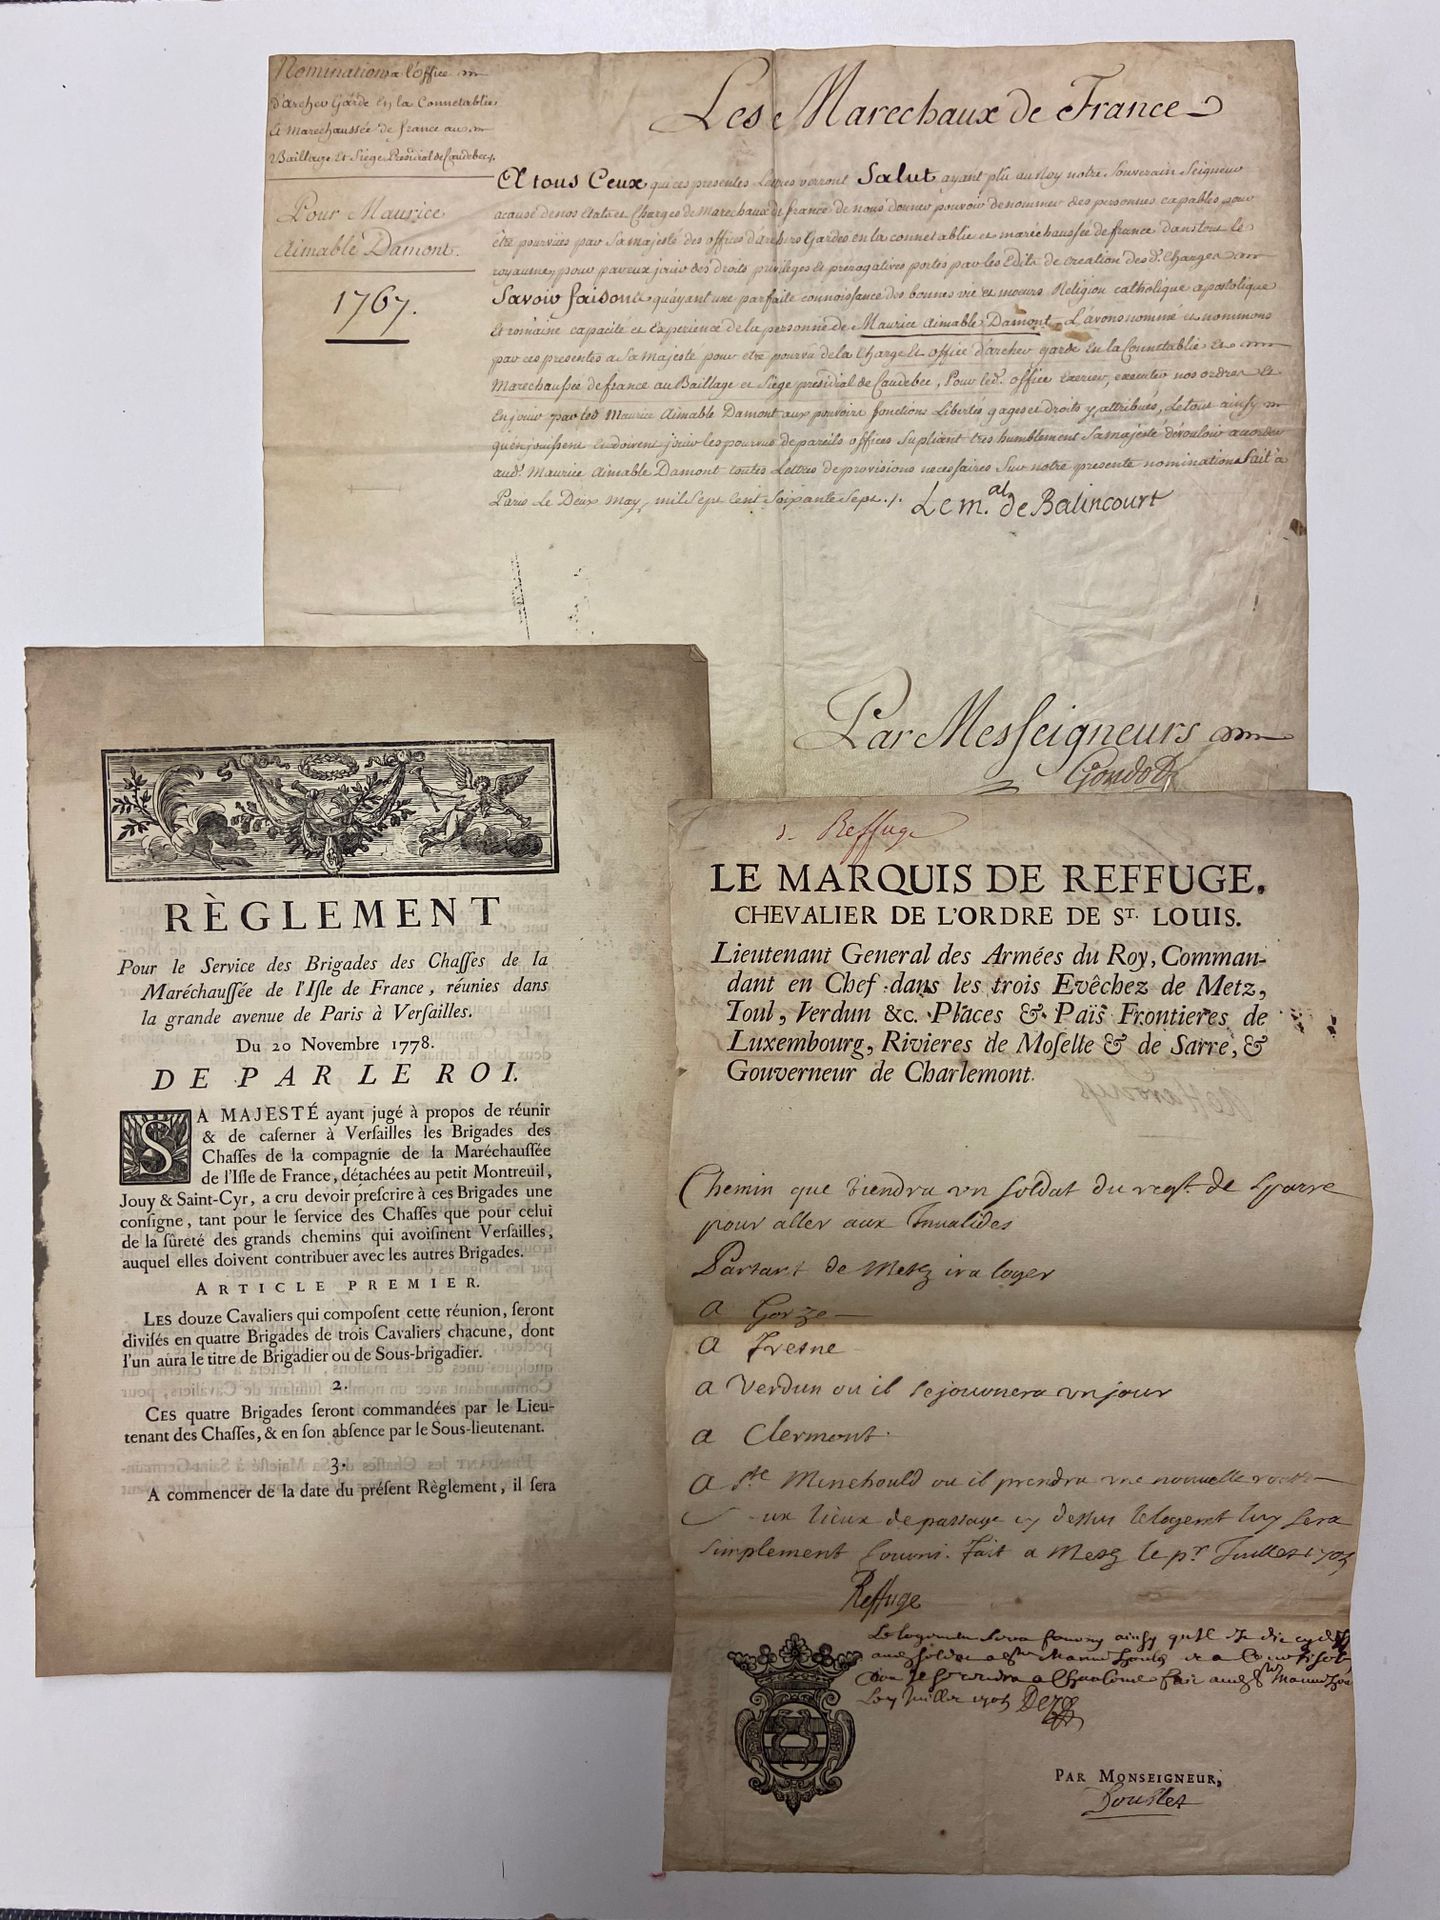 Null 杂项文件: - 圣路易骑士雷夫格侯爵的信，关于士兵文森特-德德里希-霍兰多尔前往荣军院的路线；部分印刷文件，由雷夫格侯爵签署，日期为1703年7月1日&hellip;